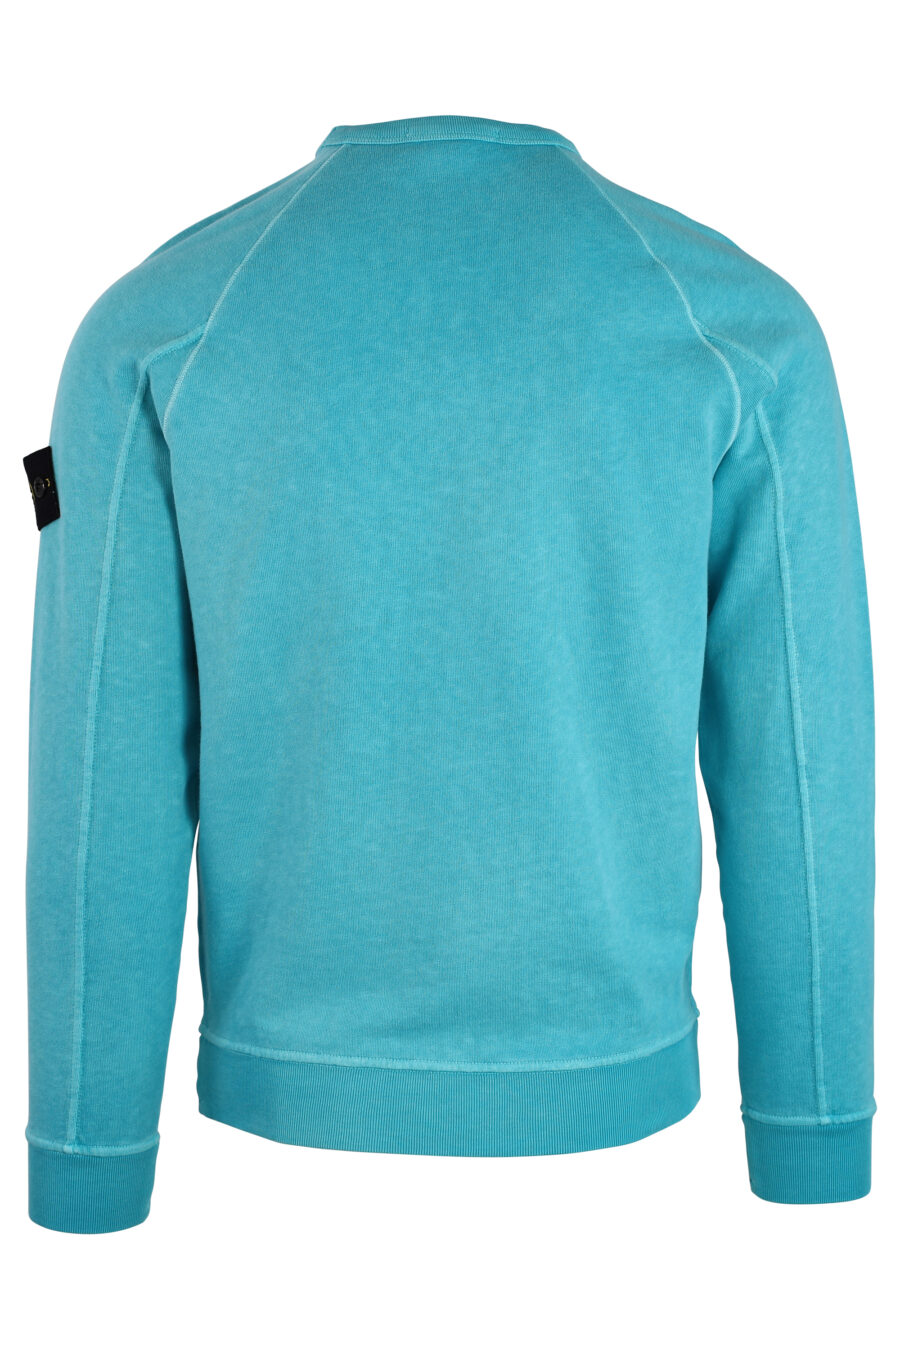 Sky blue sweatshirt with patch - IMG 0250